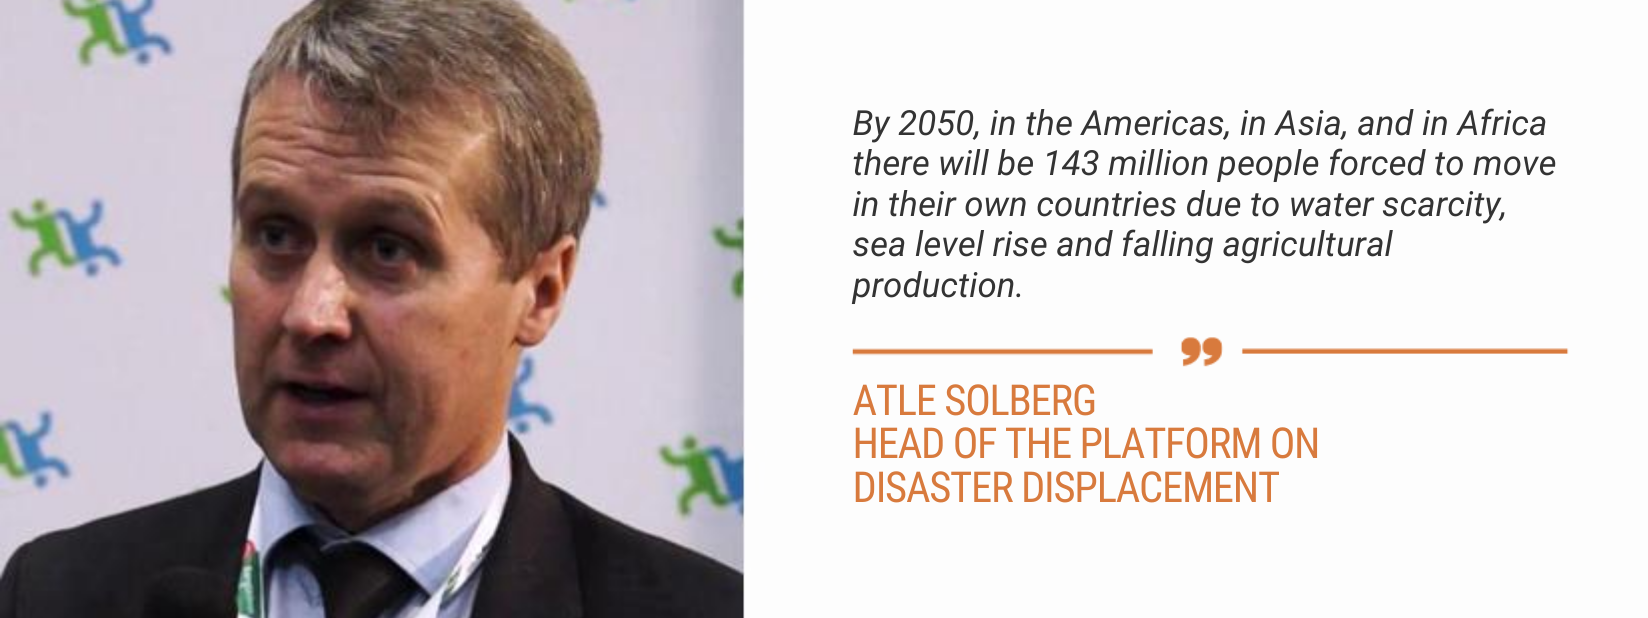 Atle Solberg